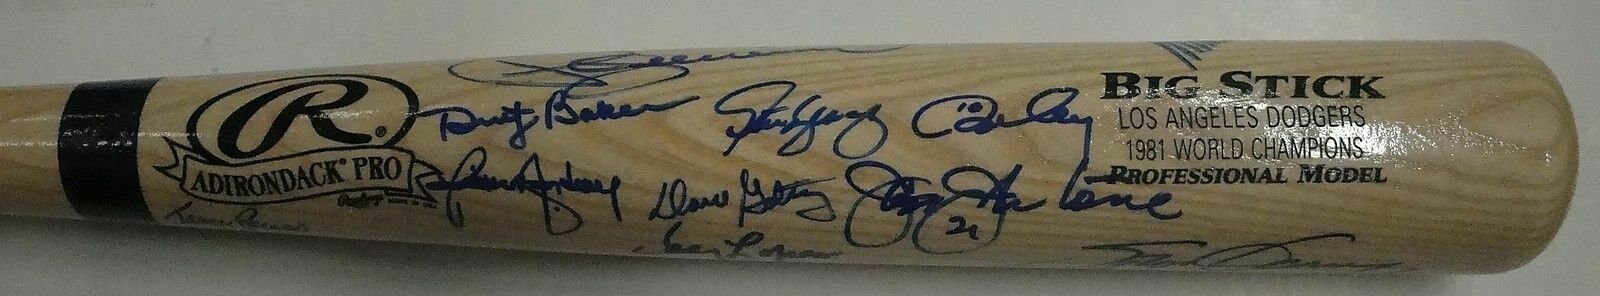 Rick Monday Signed Los Angeles Dodgers Jersey (PSA COA) 1981 World